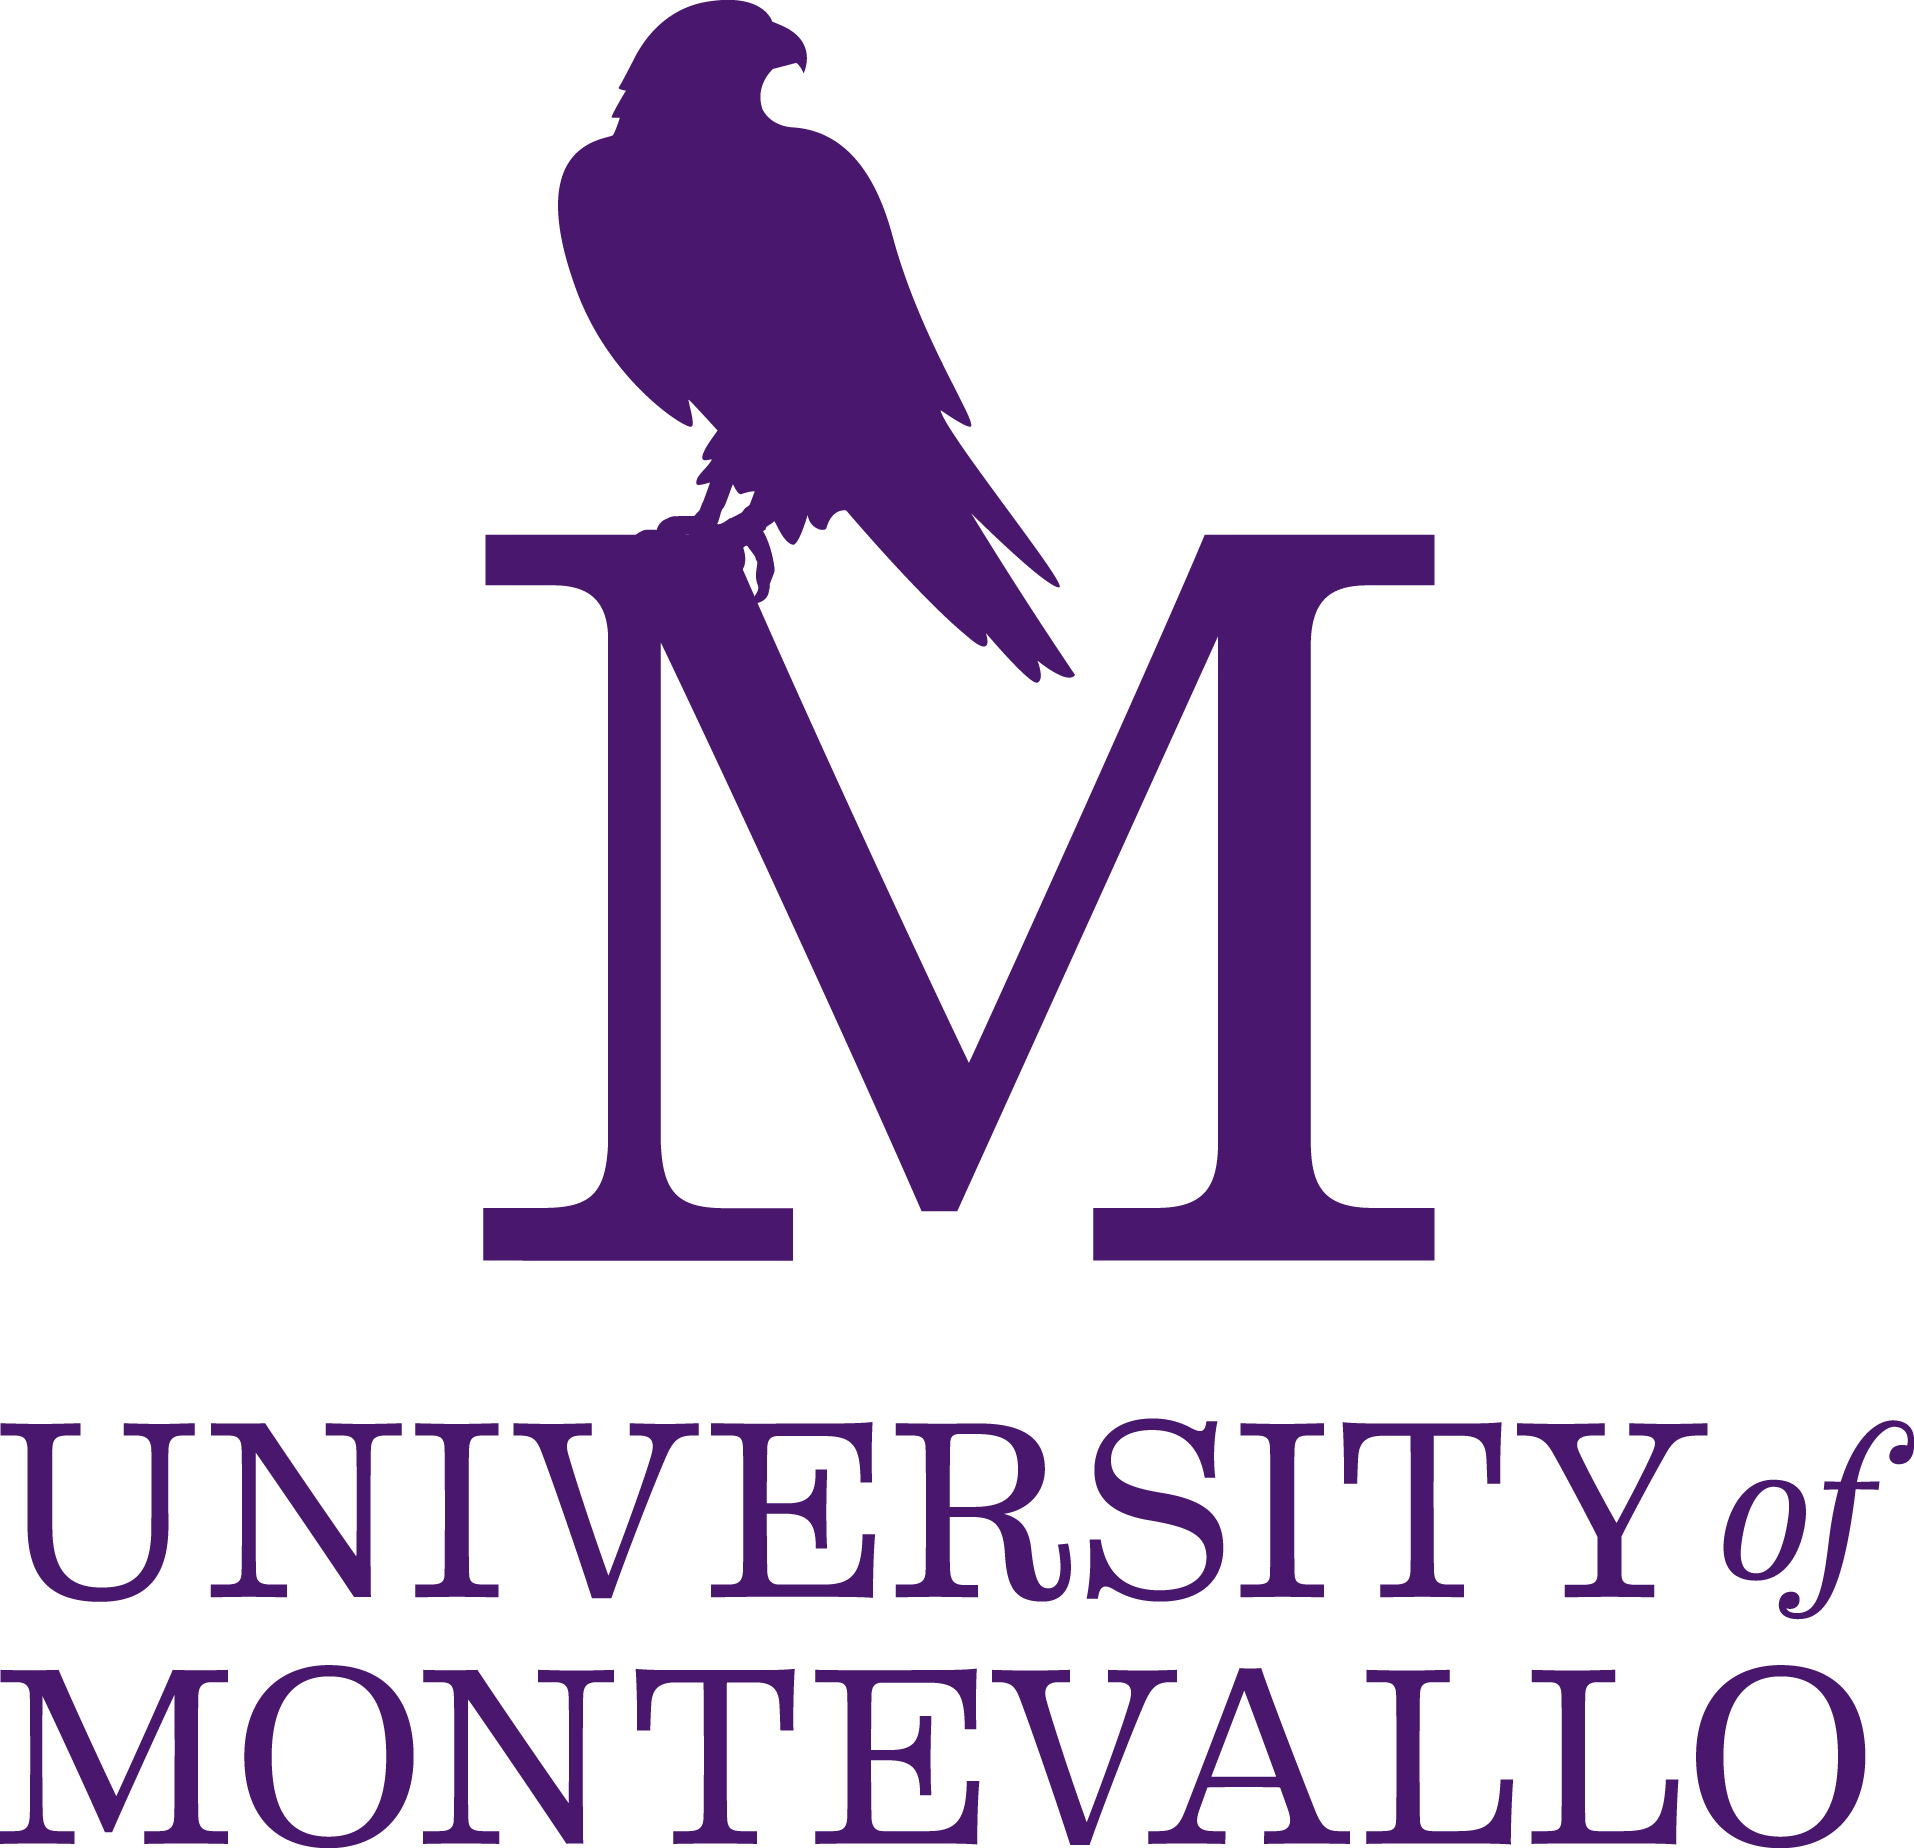 The University of Montevallo